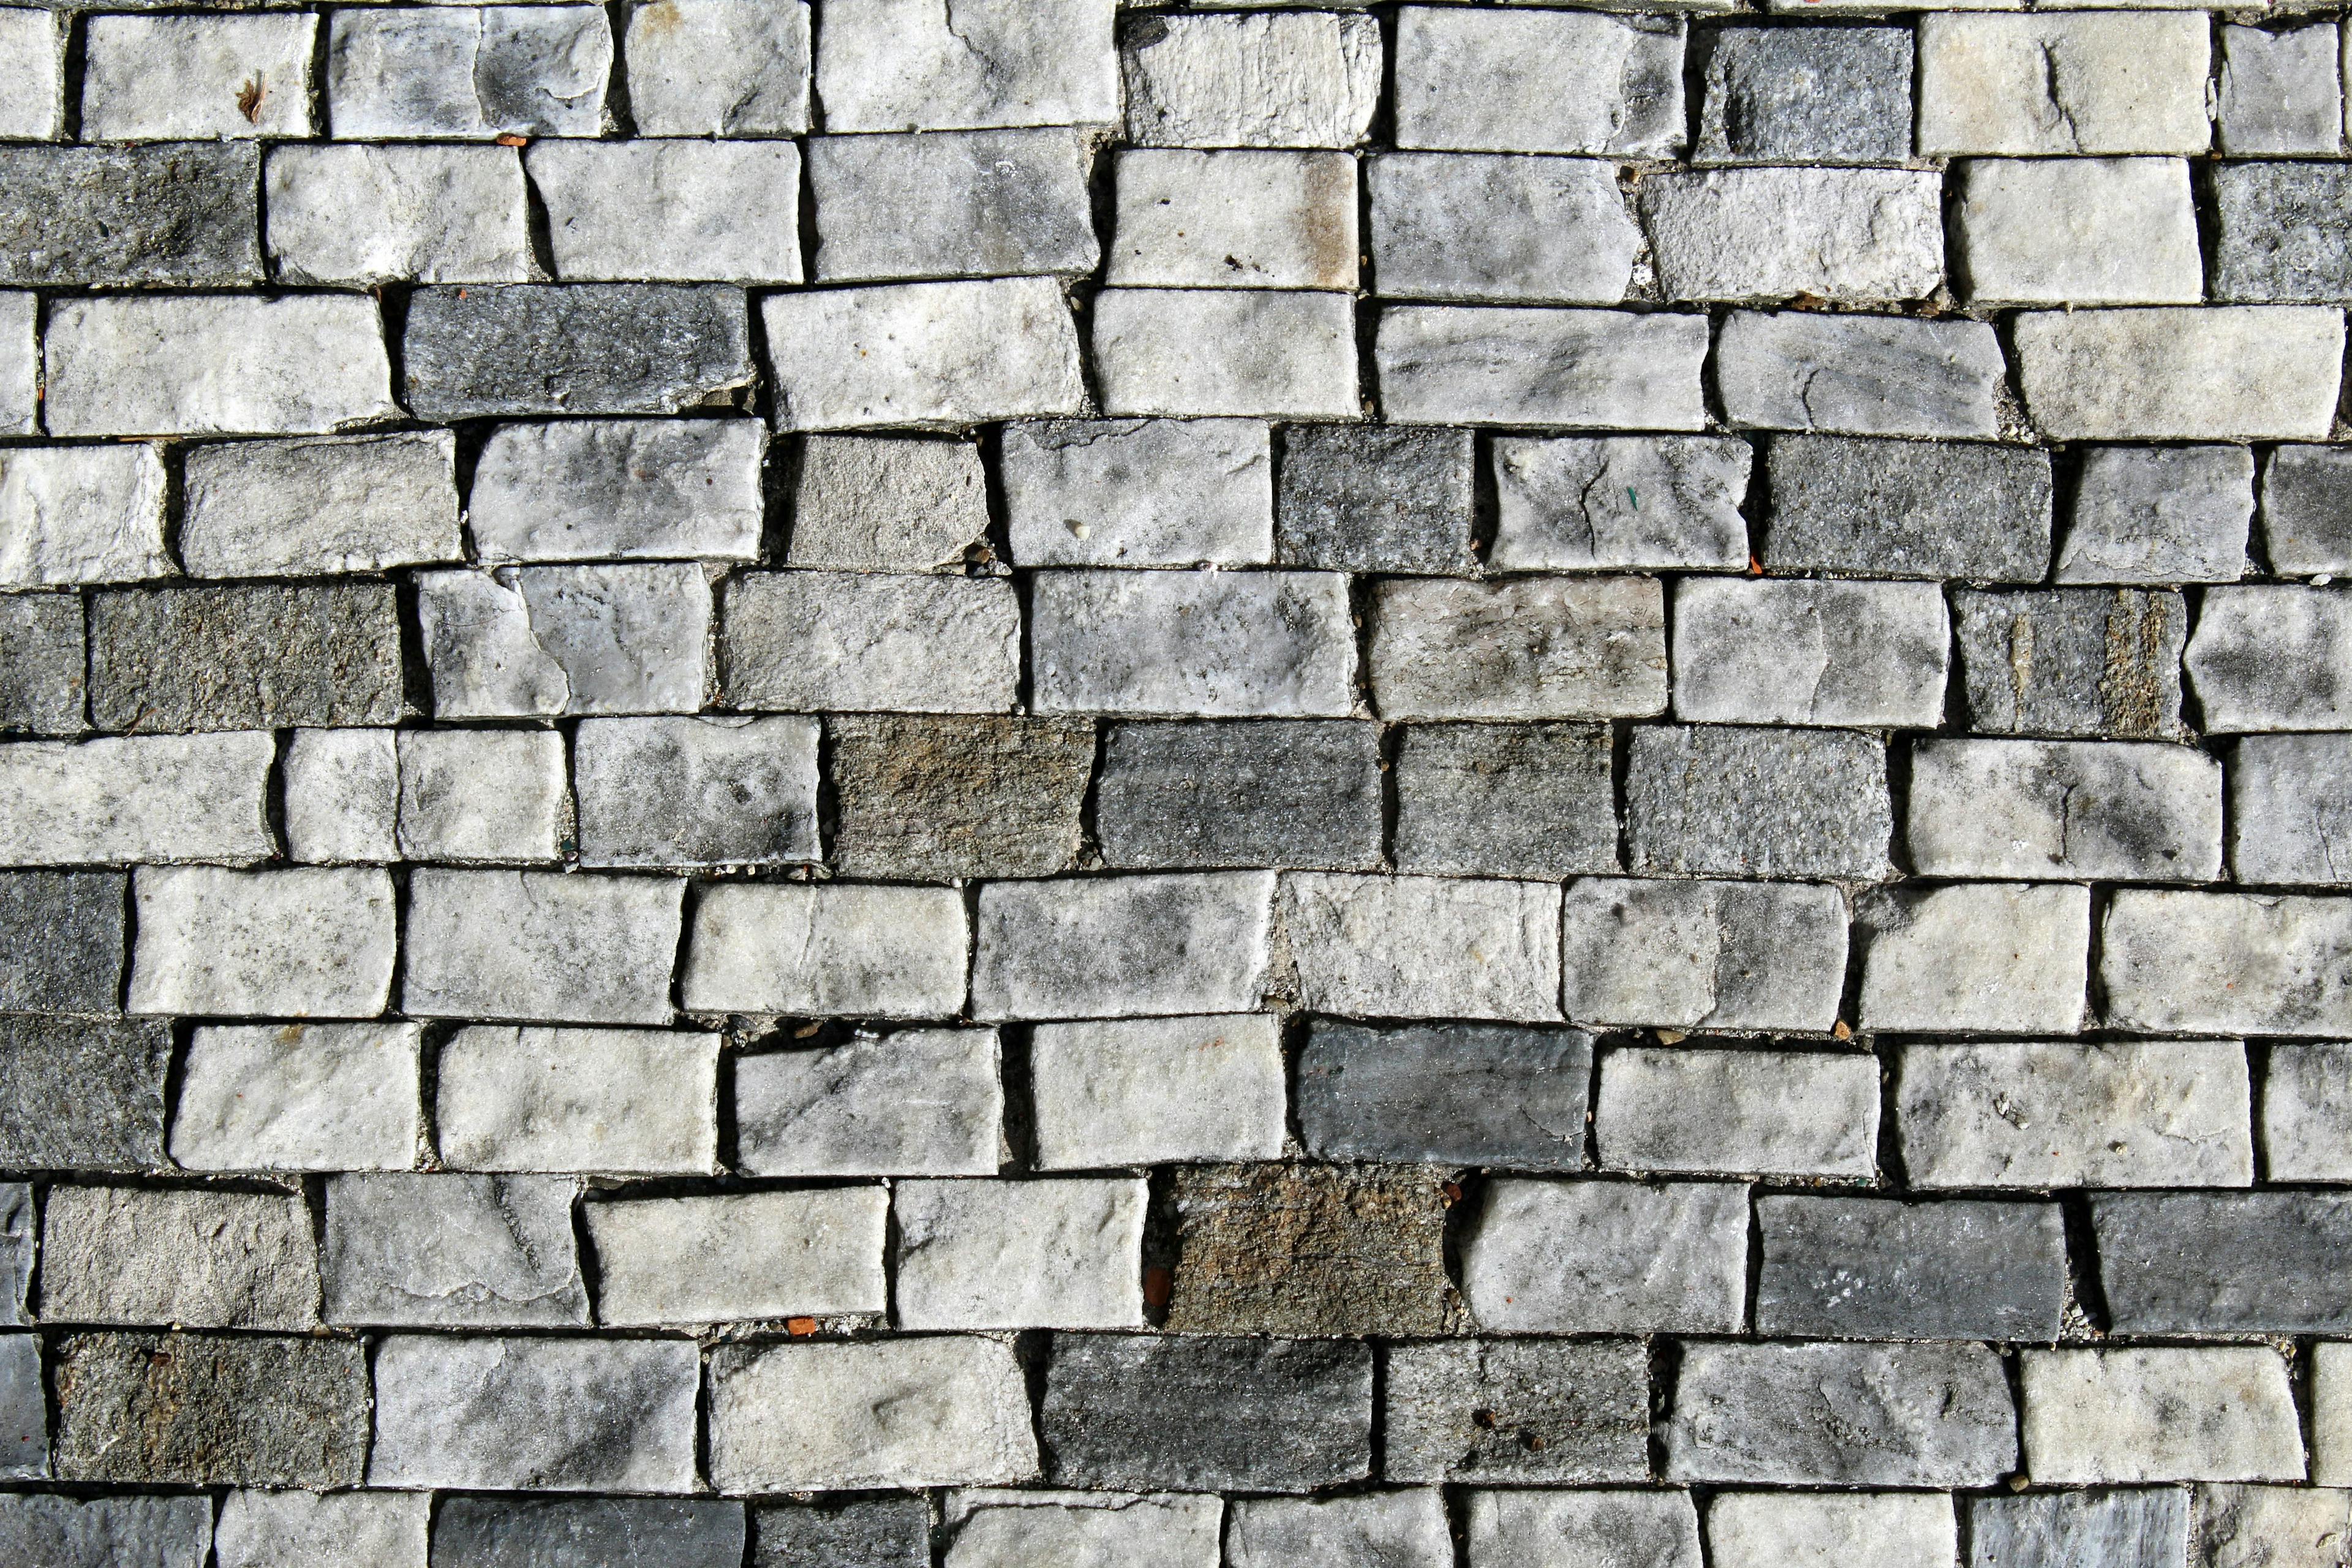 Texture made by rectangular rock tiles pavement | Image Credit: © maciejmatteo - stock.adobe.com